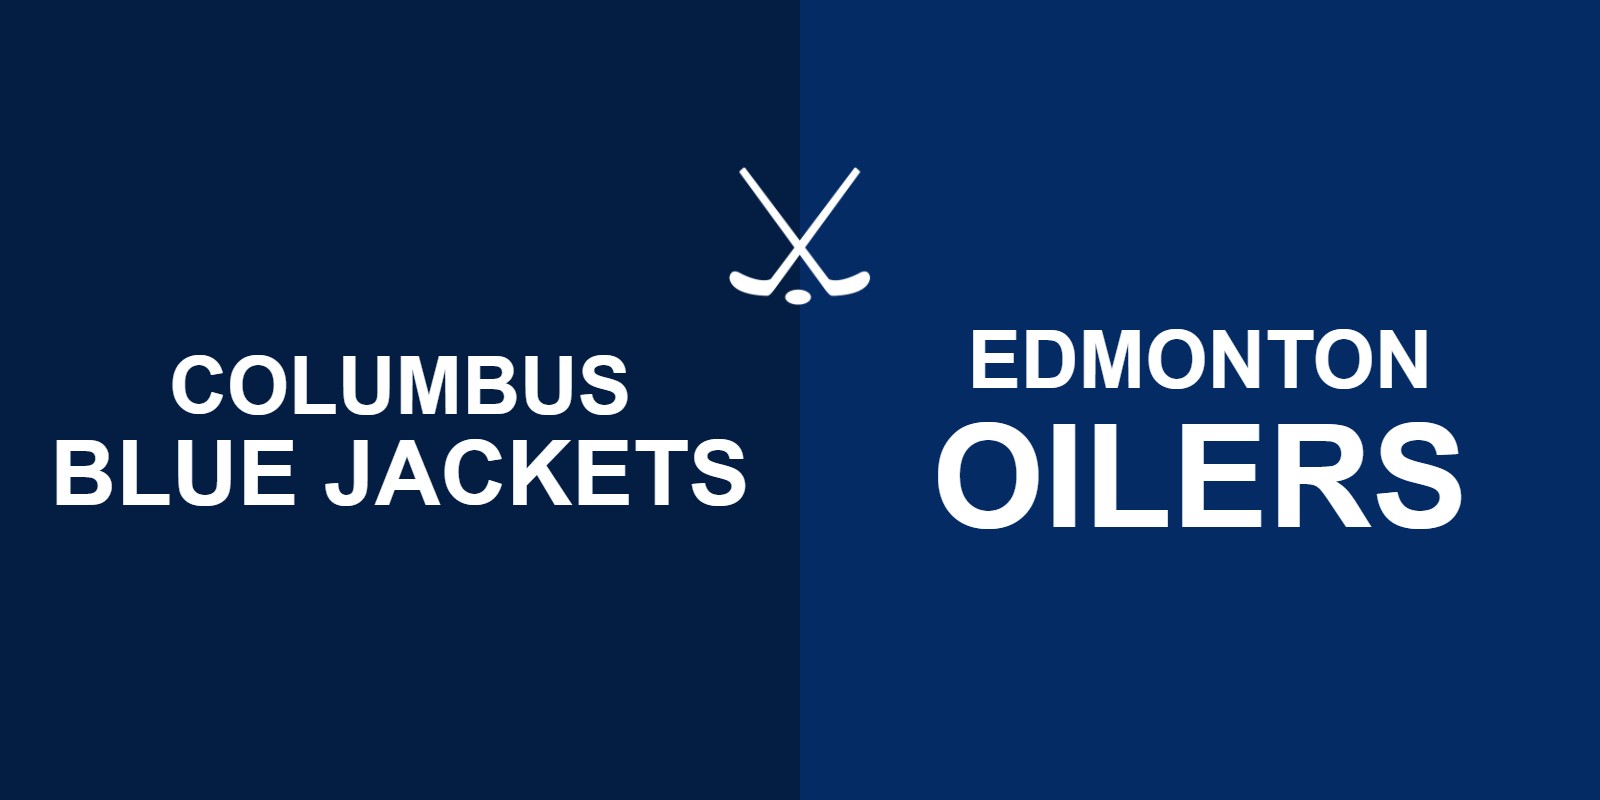 Blue Jackets vs Oilers